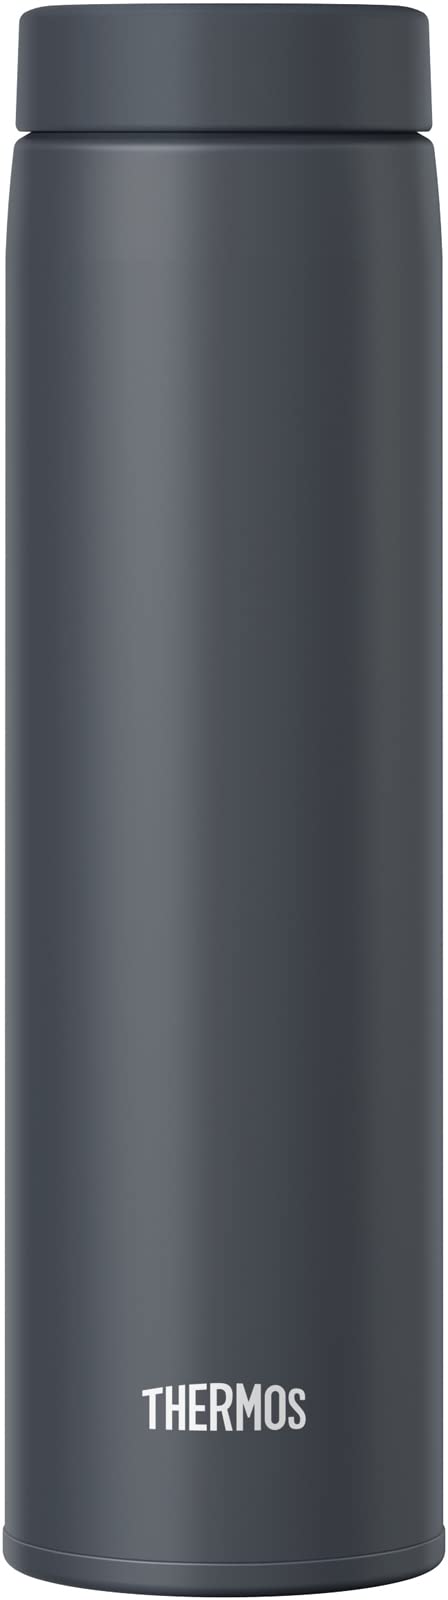 Thermos Water Bottle Vacuum Insulated Mobile Mug 600ml Dark Gray JON-600 DGY NEW_2